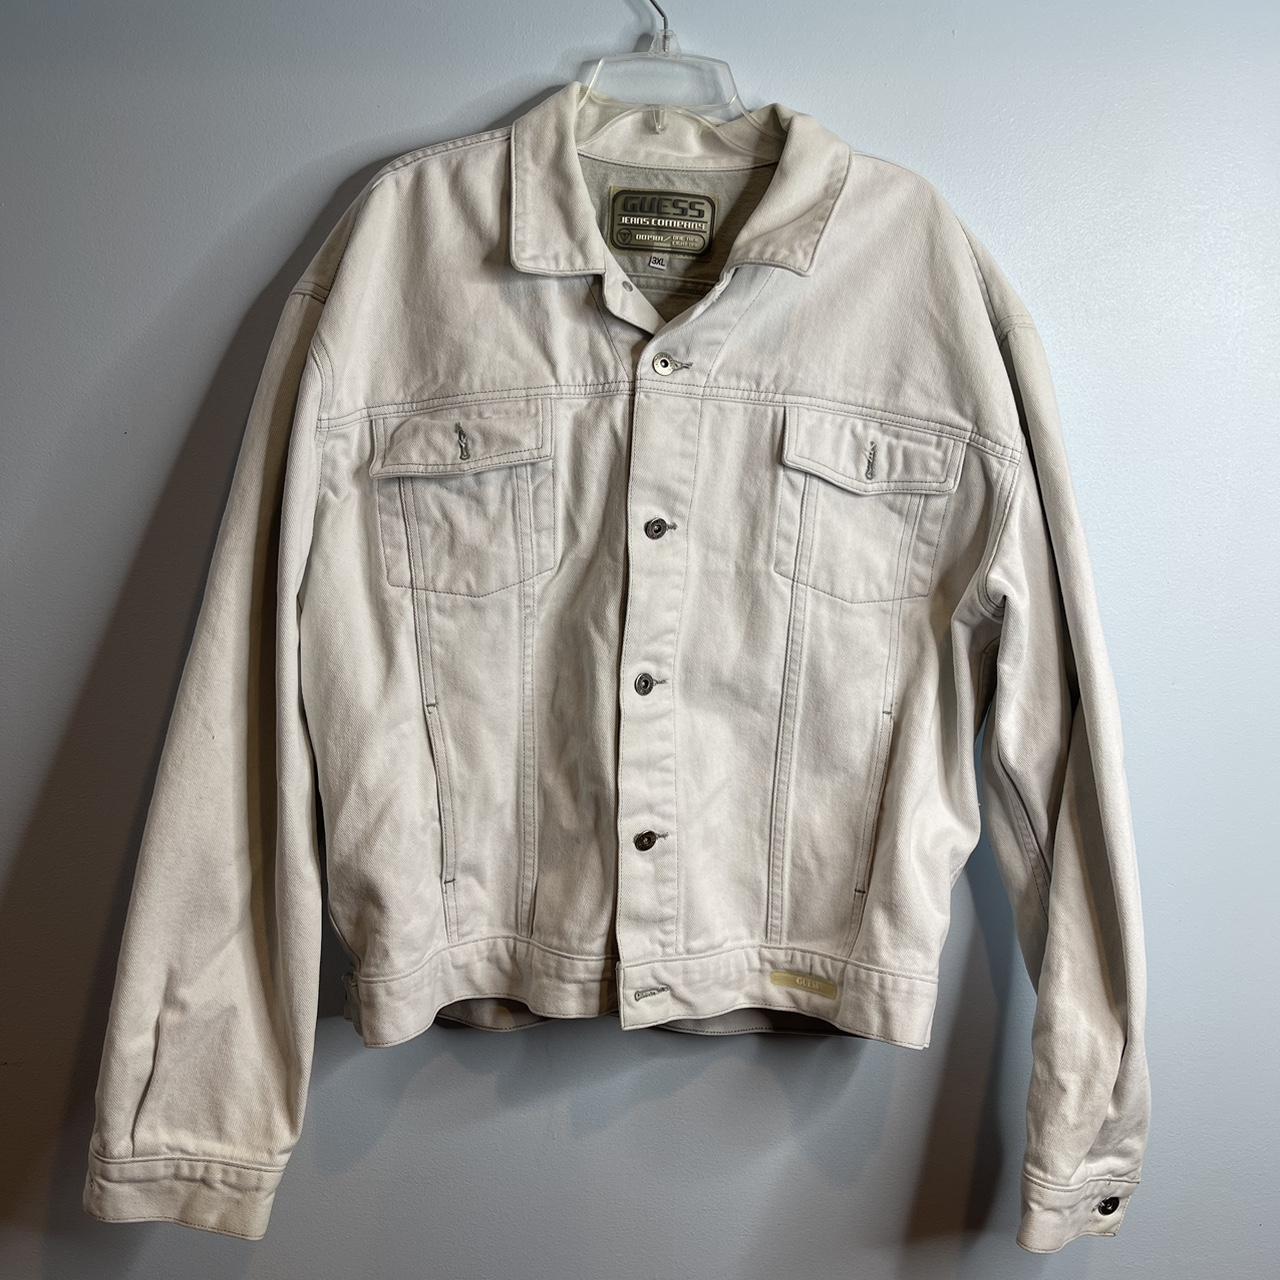 White - Plus Size Jacket